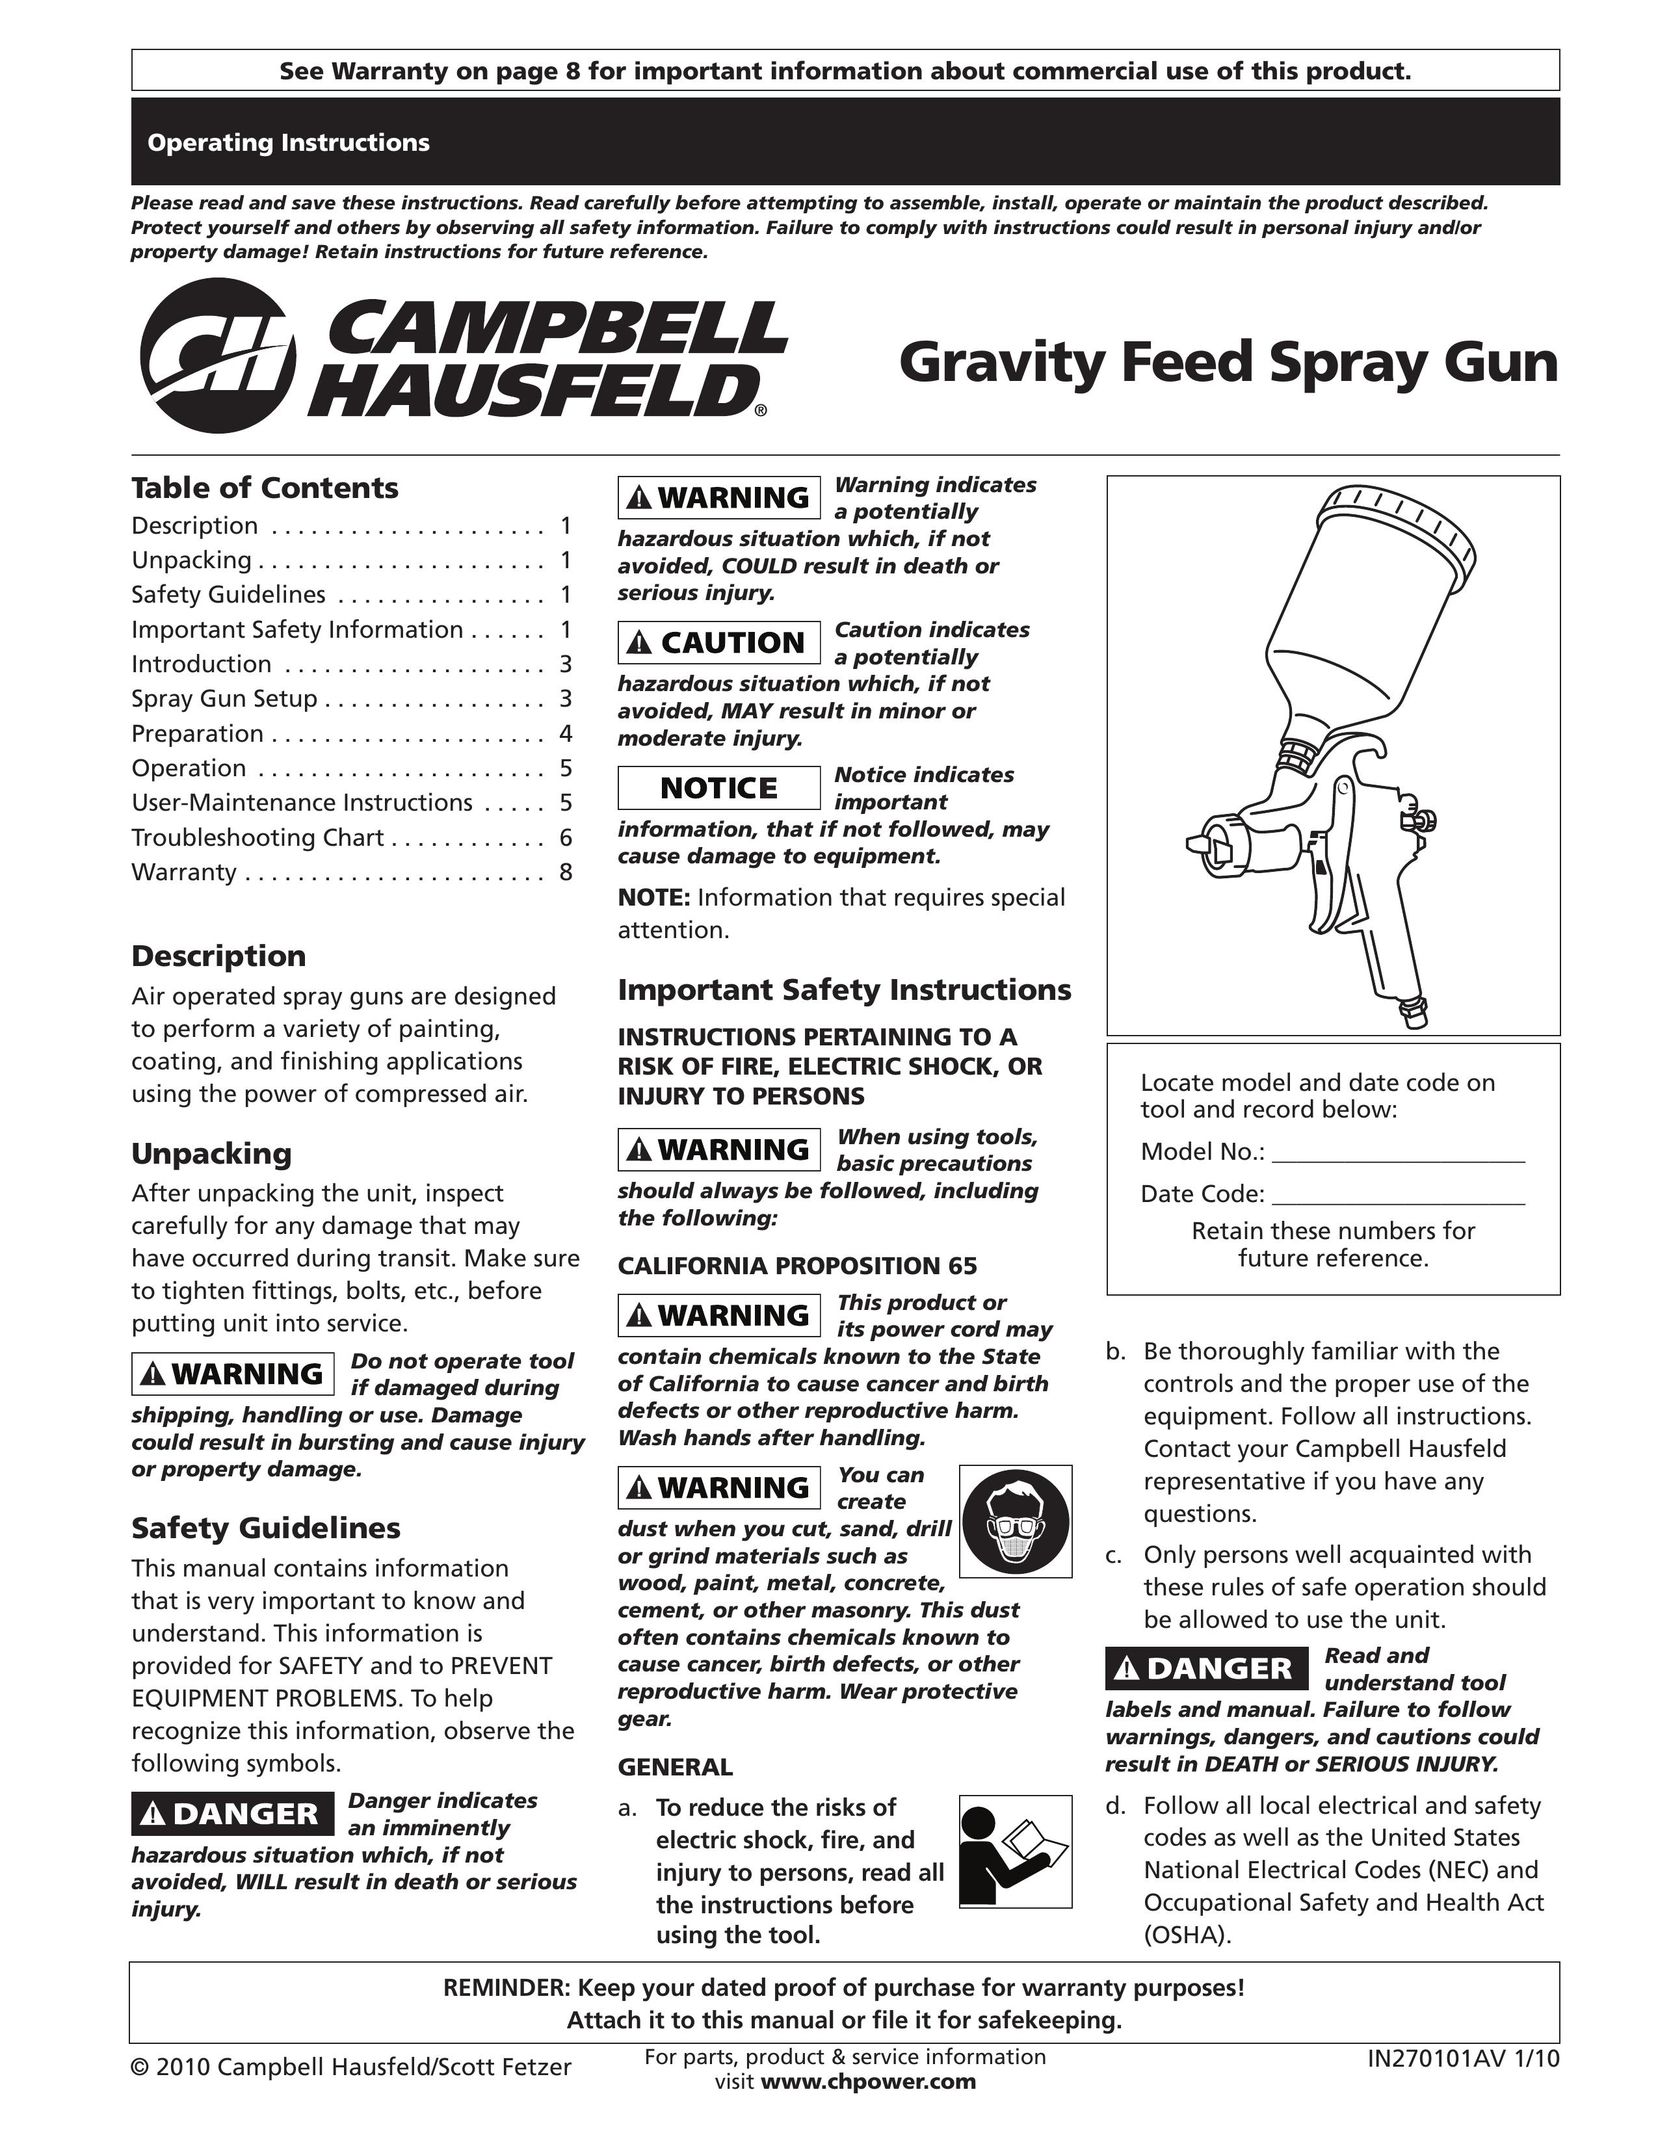 Campbell Hausfeld DH5700 Paint Sprayer User Manual